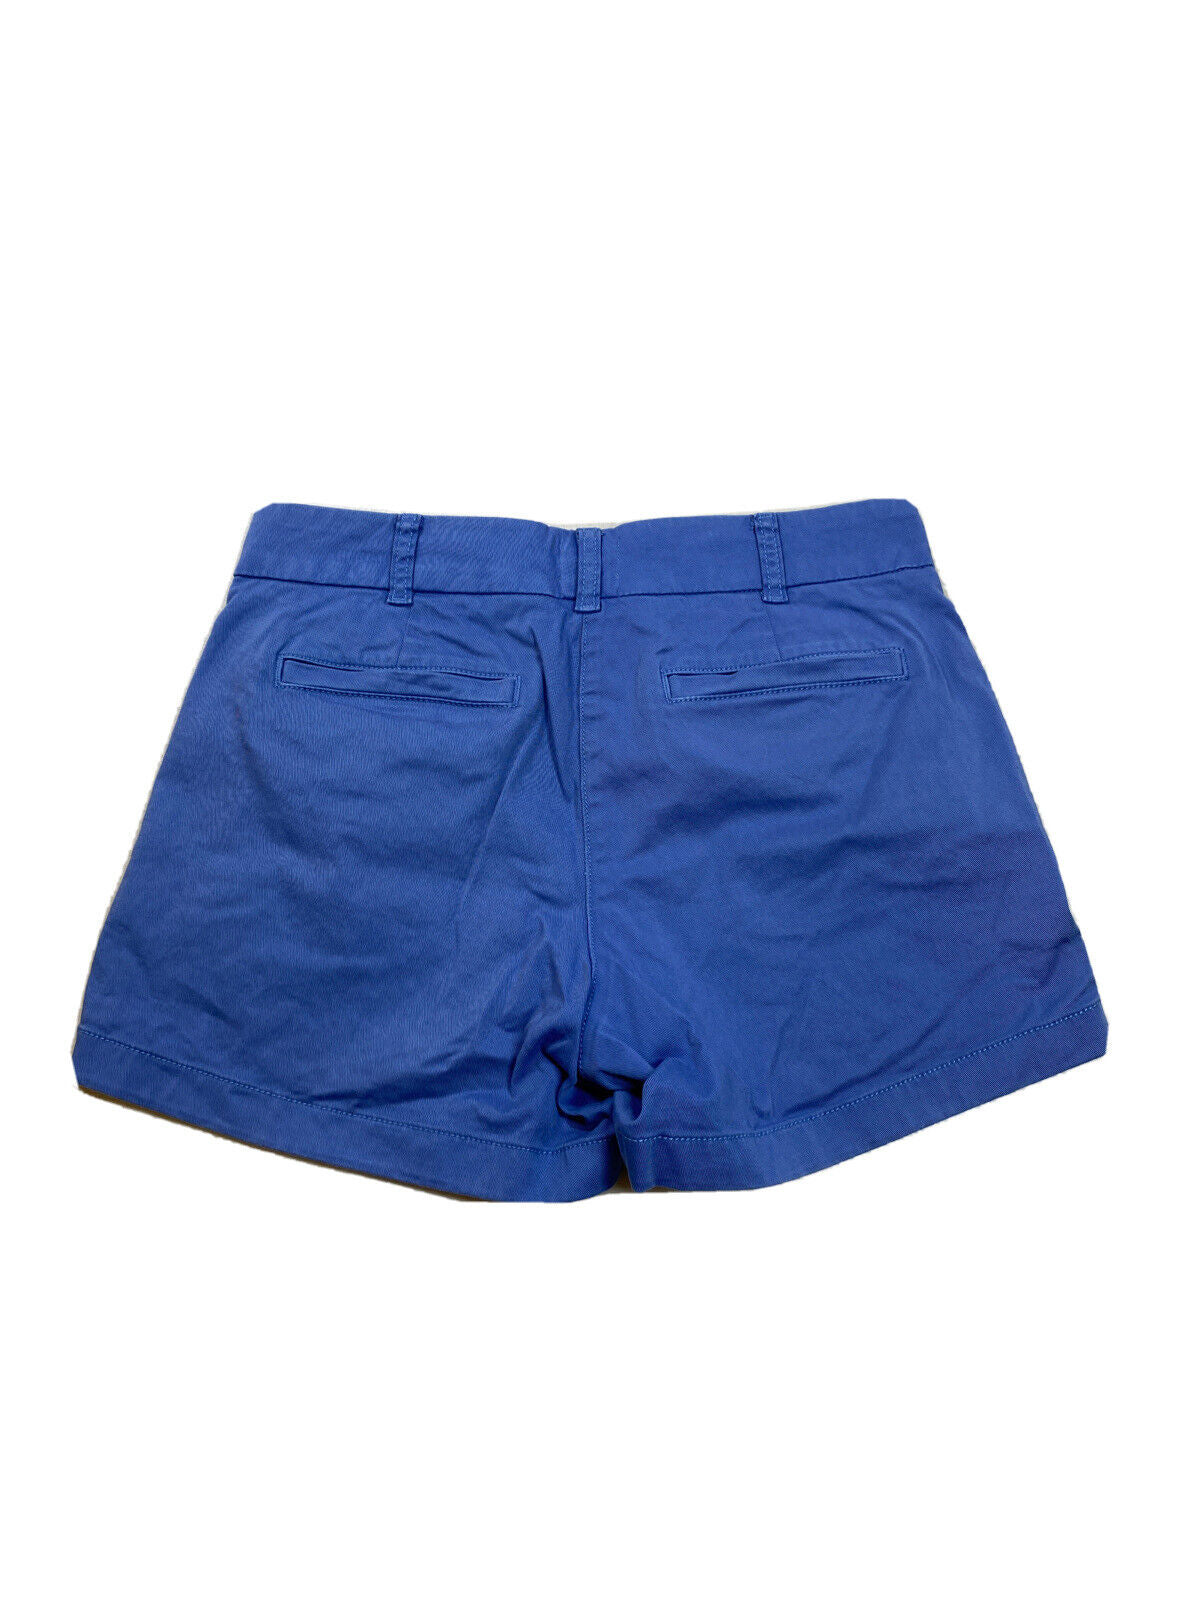 J.Crew Women's Blue Cotton Chino Shorts - 4